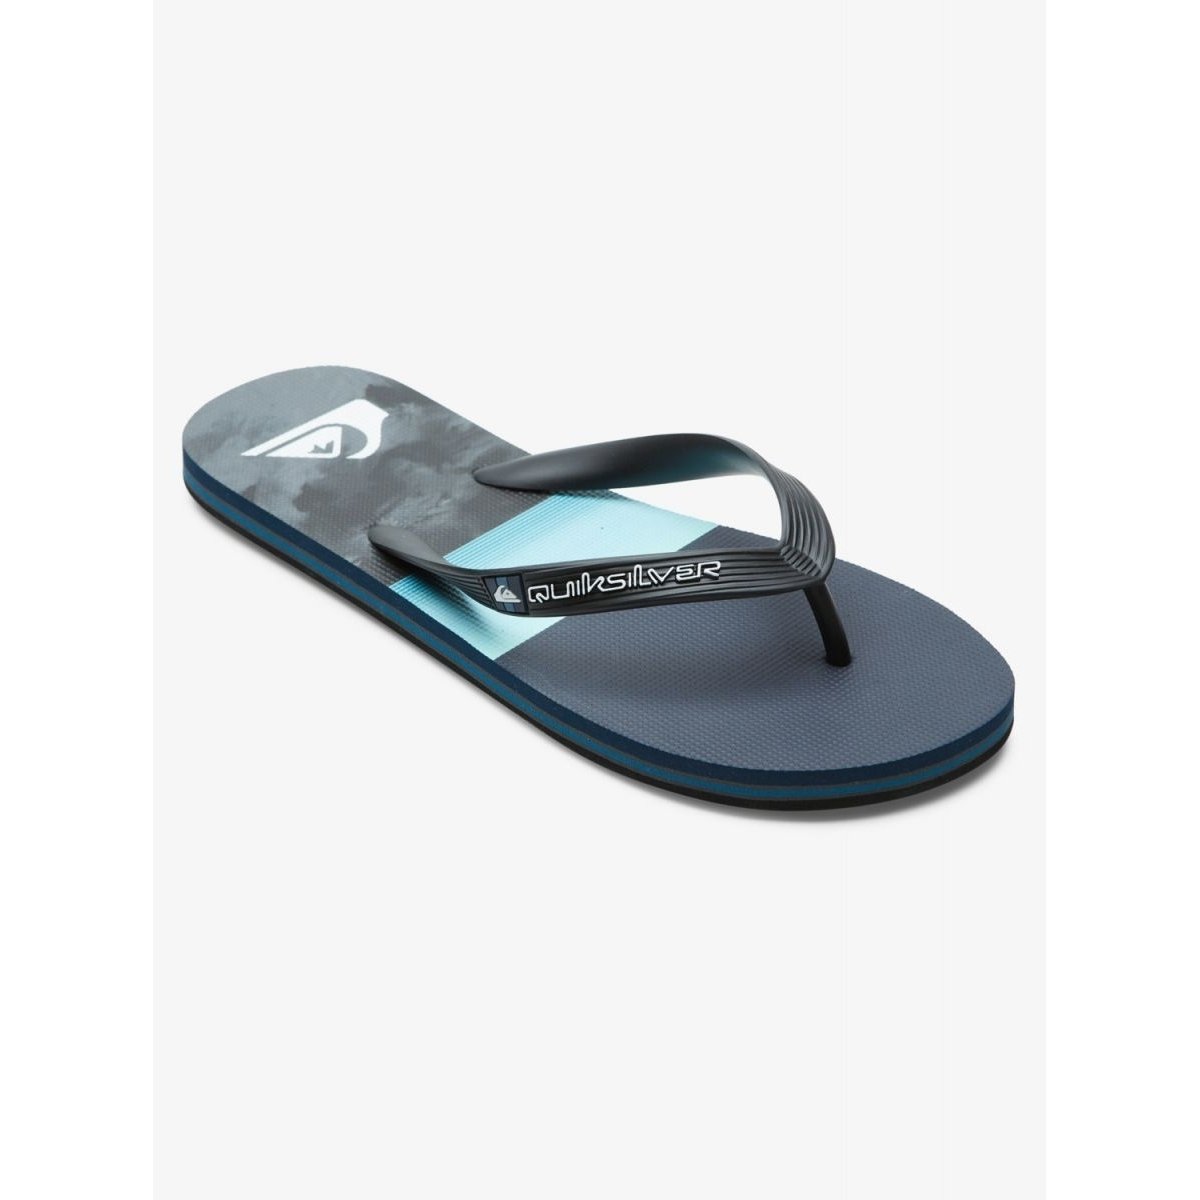 Quiksilver Men's Molokai Panel Flip Flop Sandals - AQYL101263-XBBS BLUE/BLUE/GREY - BLUE/BLUE/GREY, 7